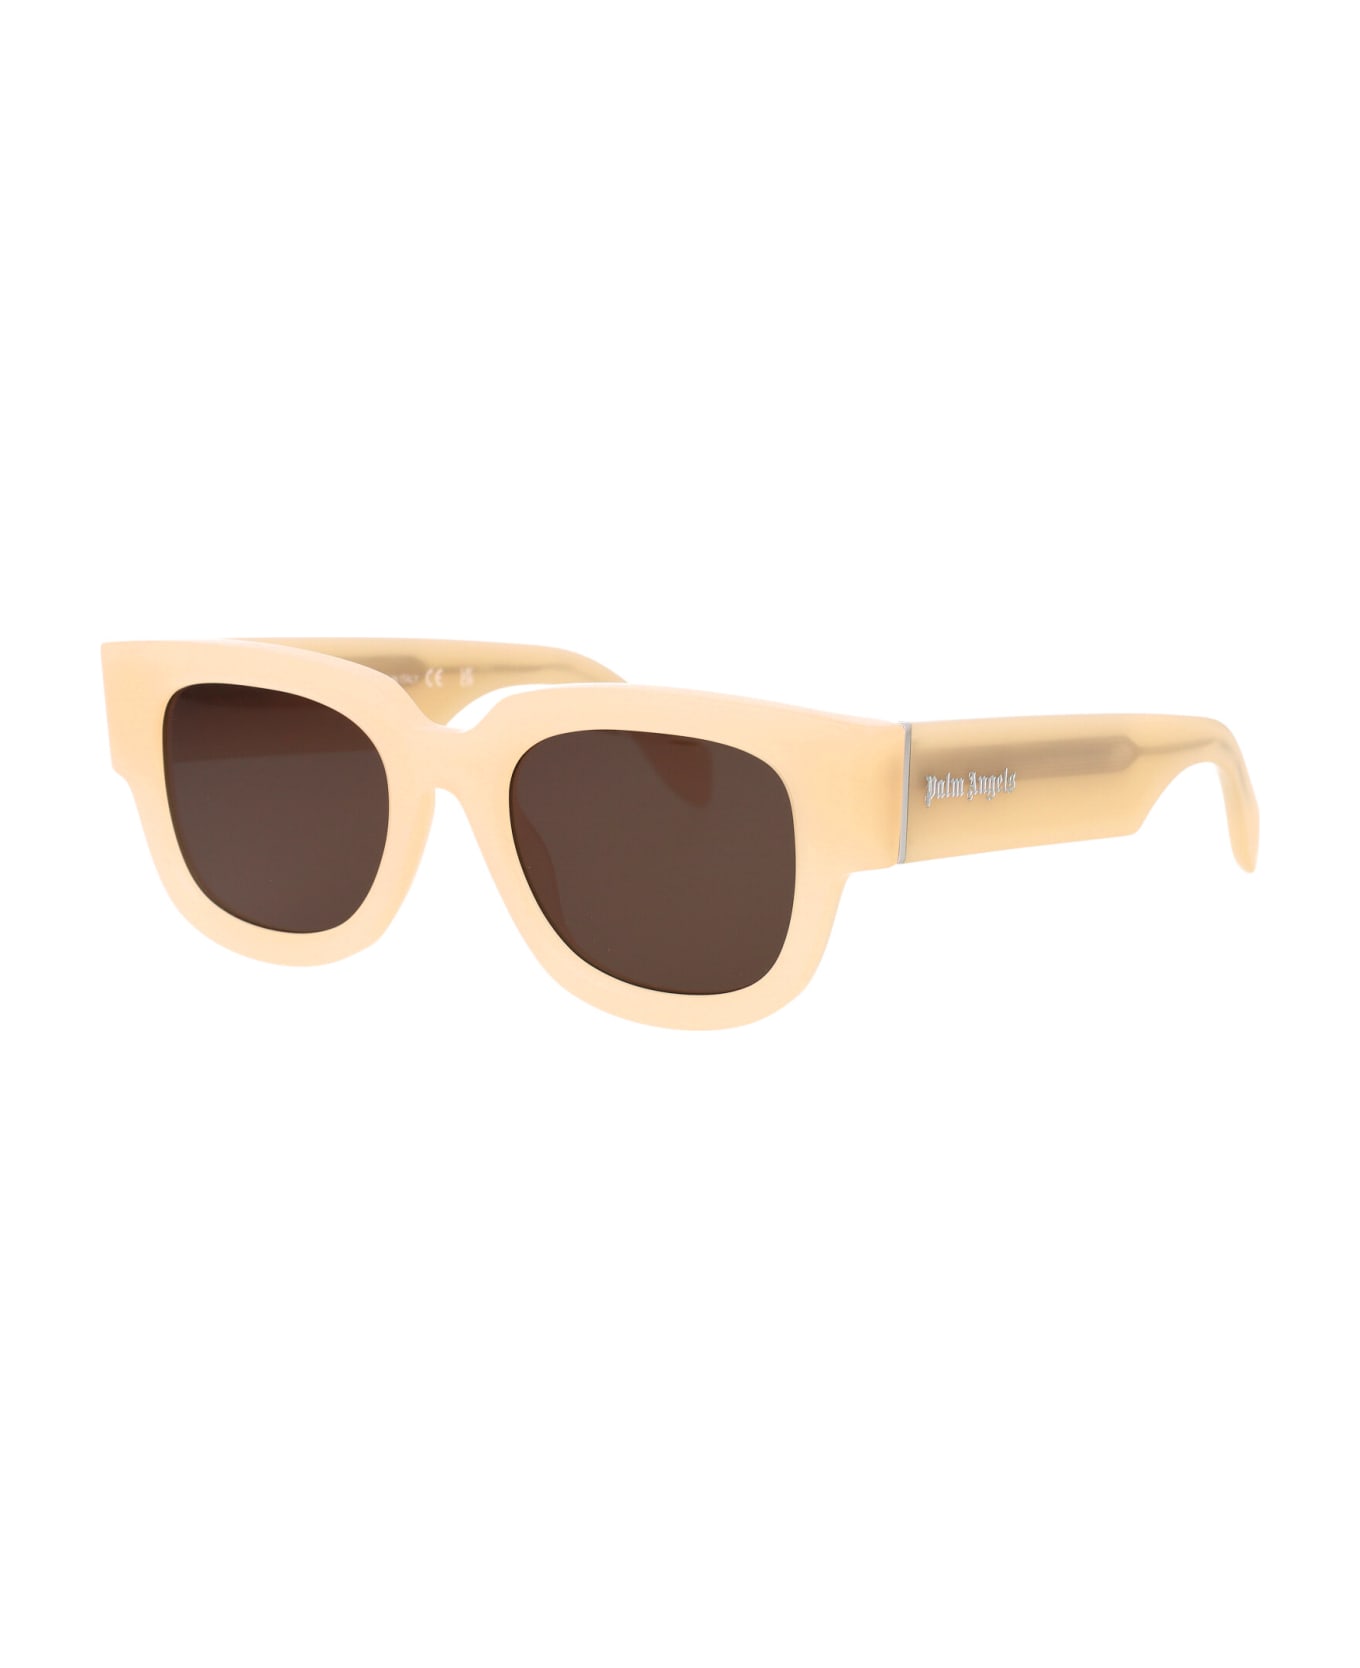 Palm Angels Monterey Sunglasses - 1764 SAND